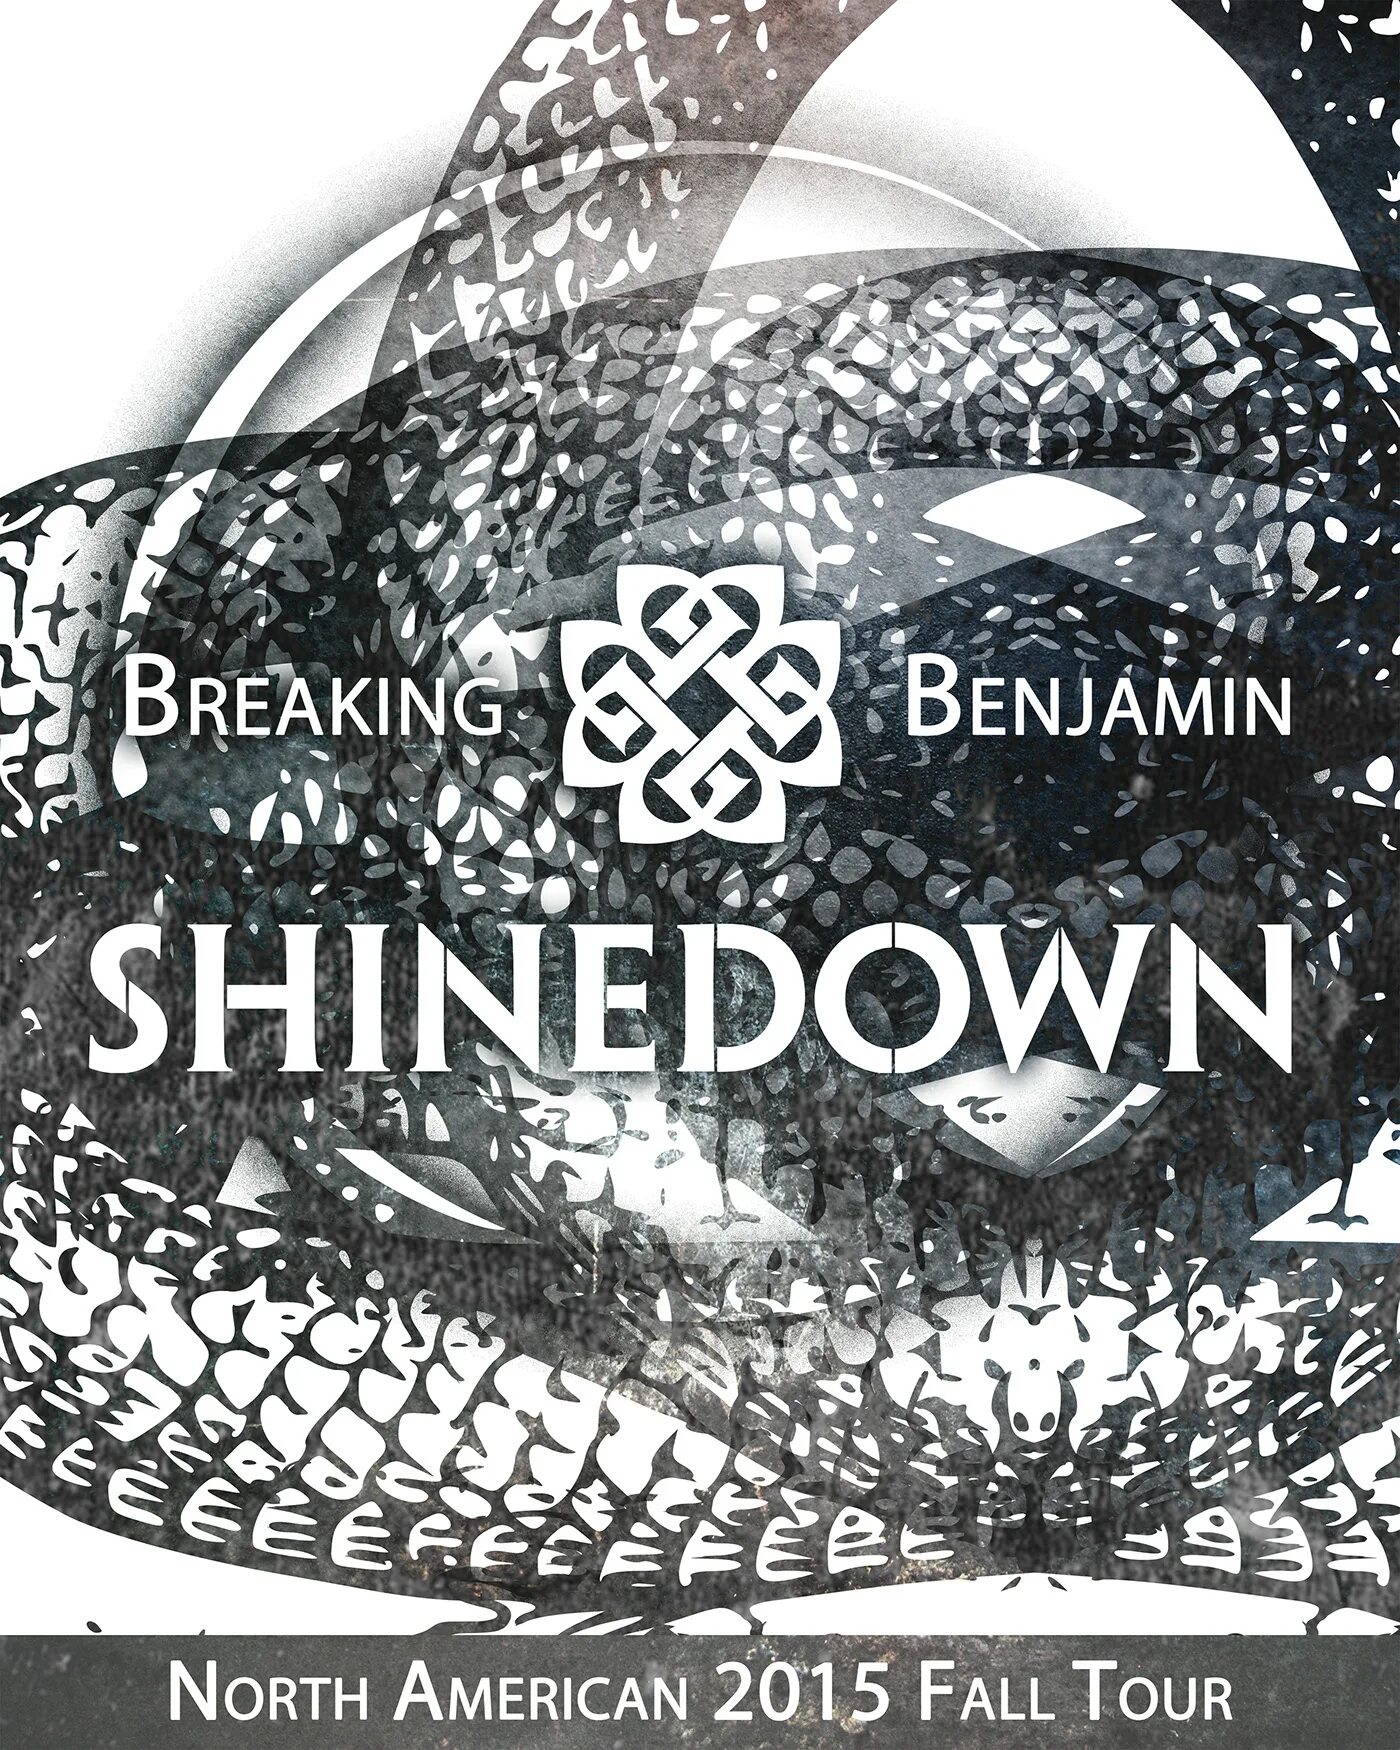 Shining down. Shinedown Breaking Benjamin. Breaking Benjamin эмблема.